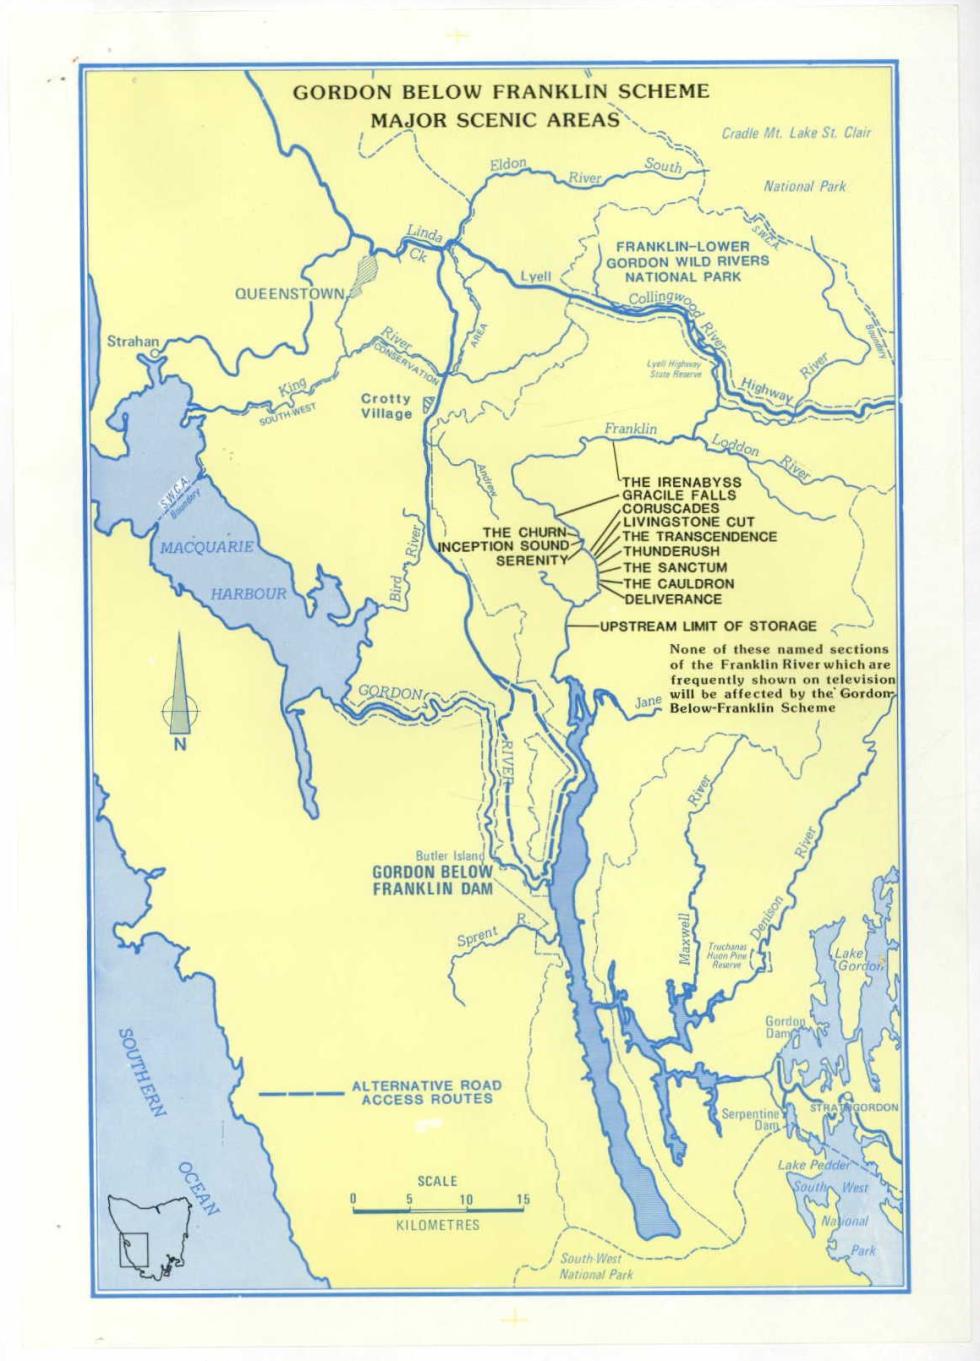 Map of the Gordon below Franklin area.